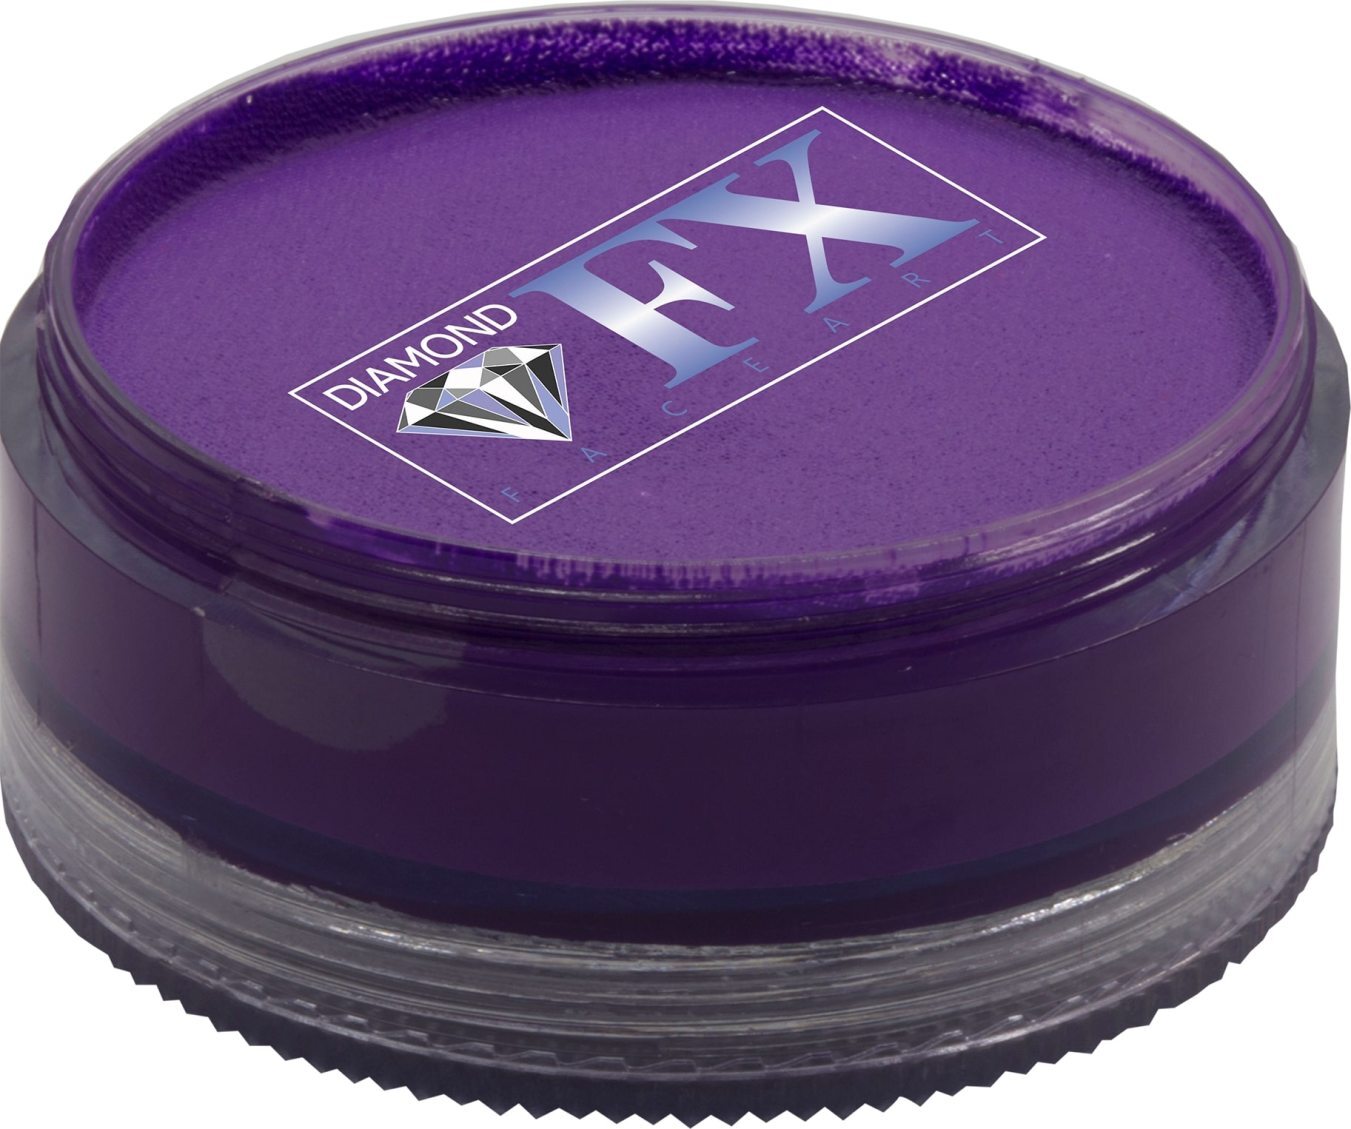 Diamond FX Purple Neon 90g (Cosmetic) - Small Image